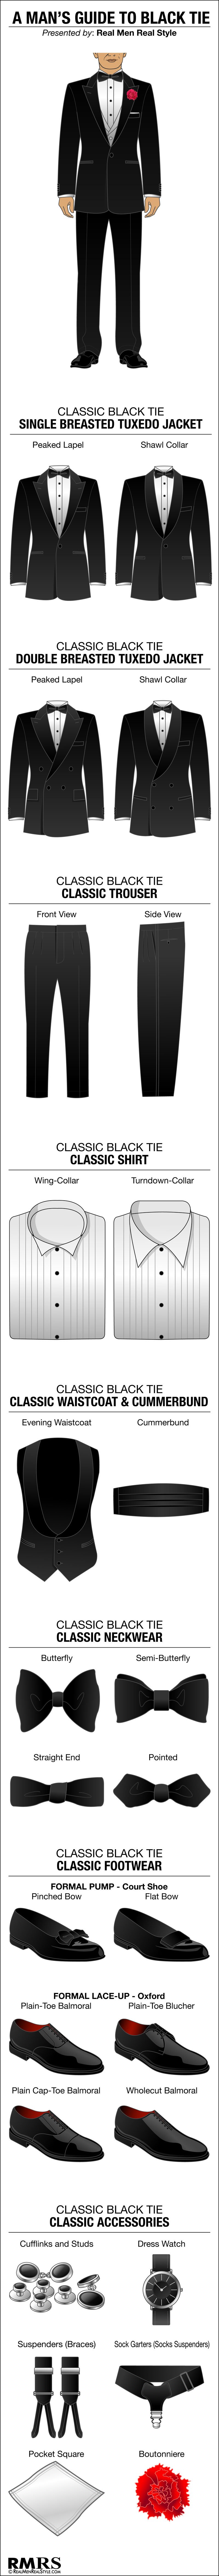 guide_to_black_tie_tuxedo_infographic_3.jpg